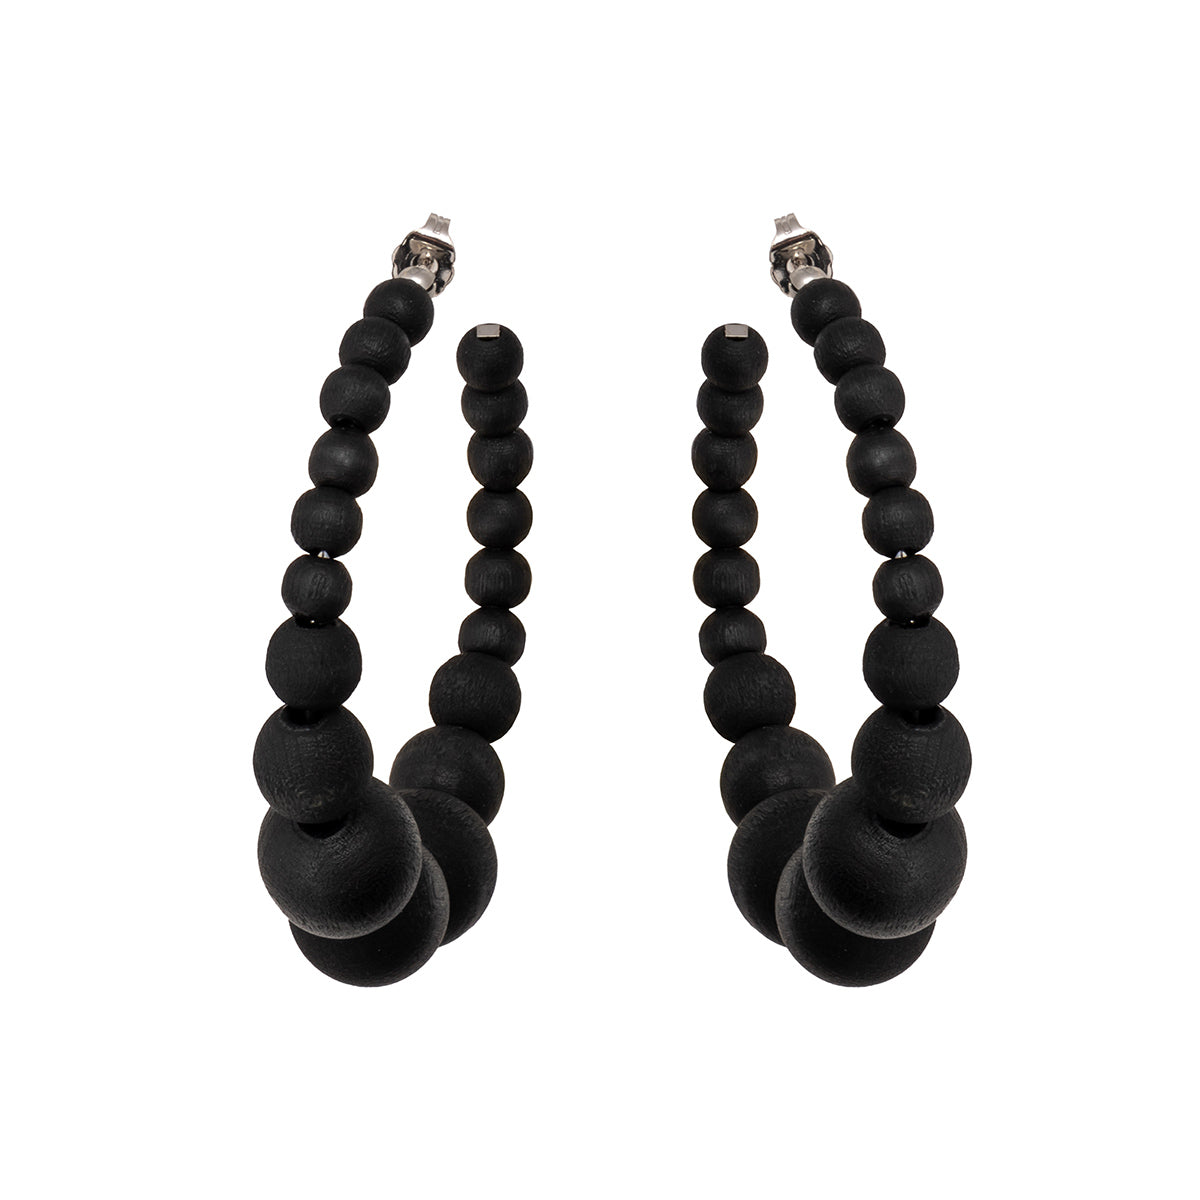 Angervo earrings, black